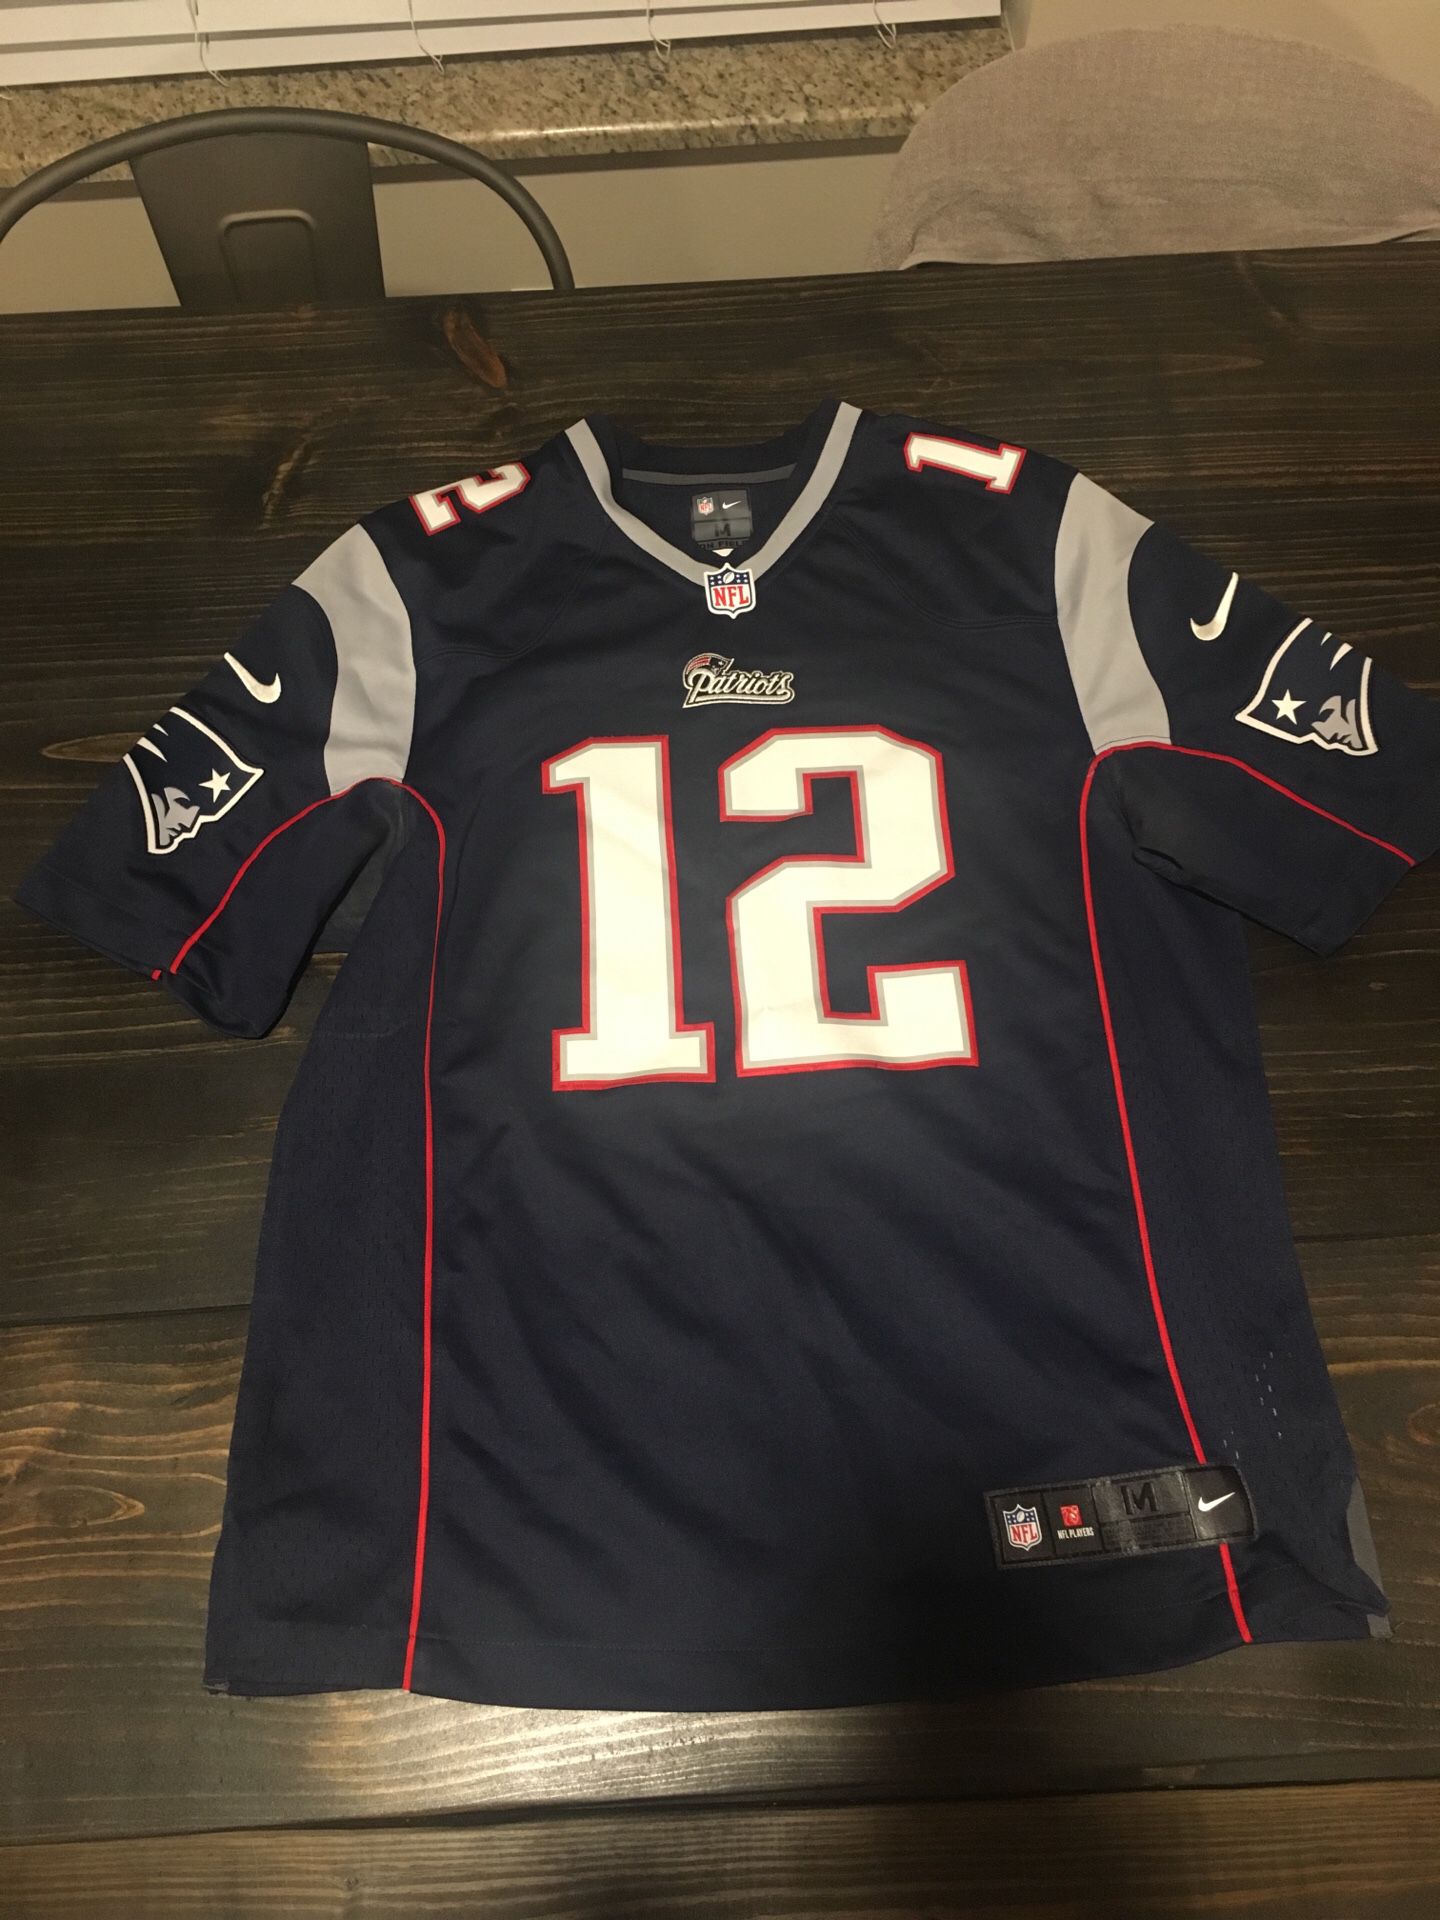 Medium New England Patriots jersey